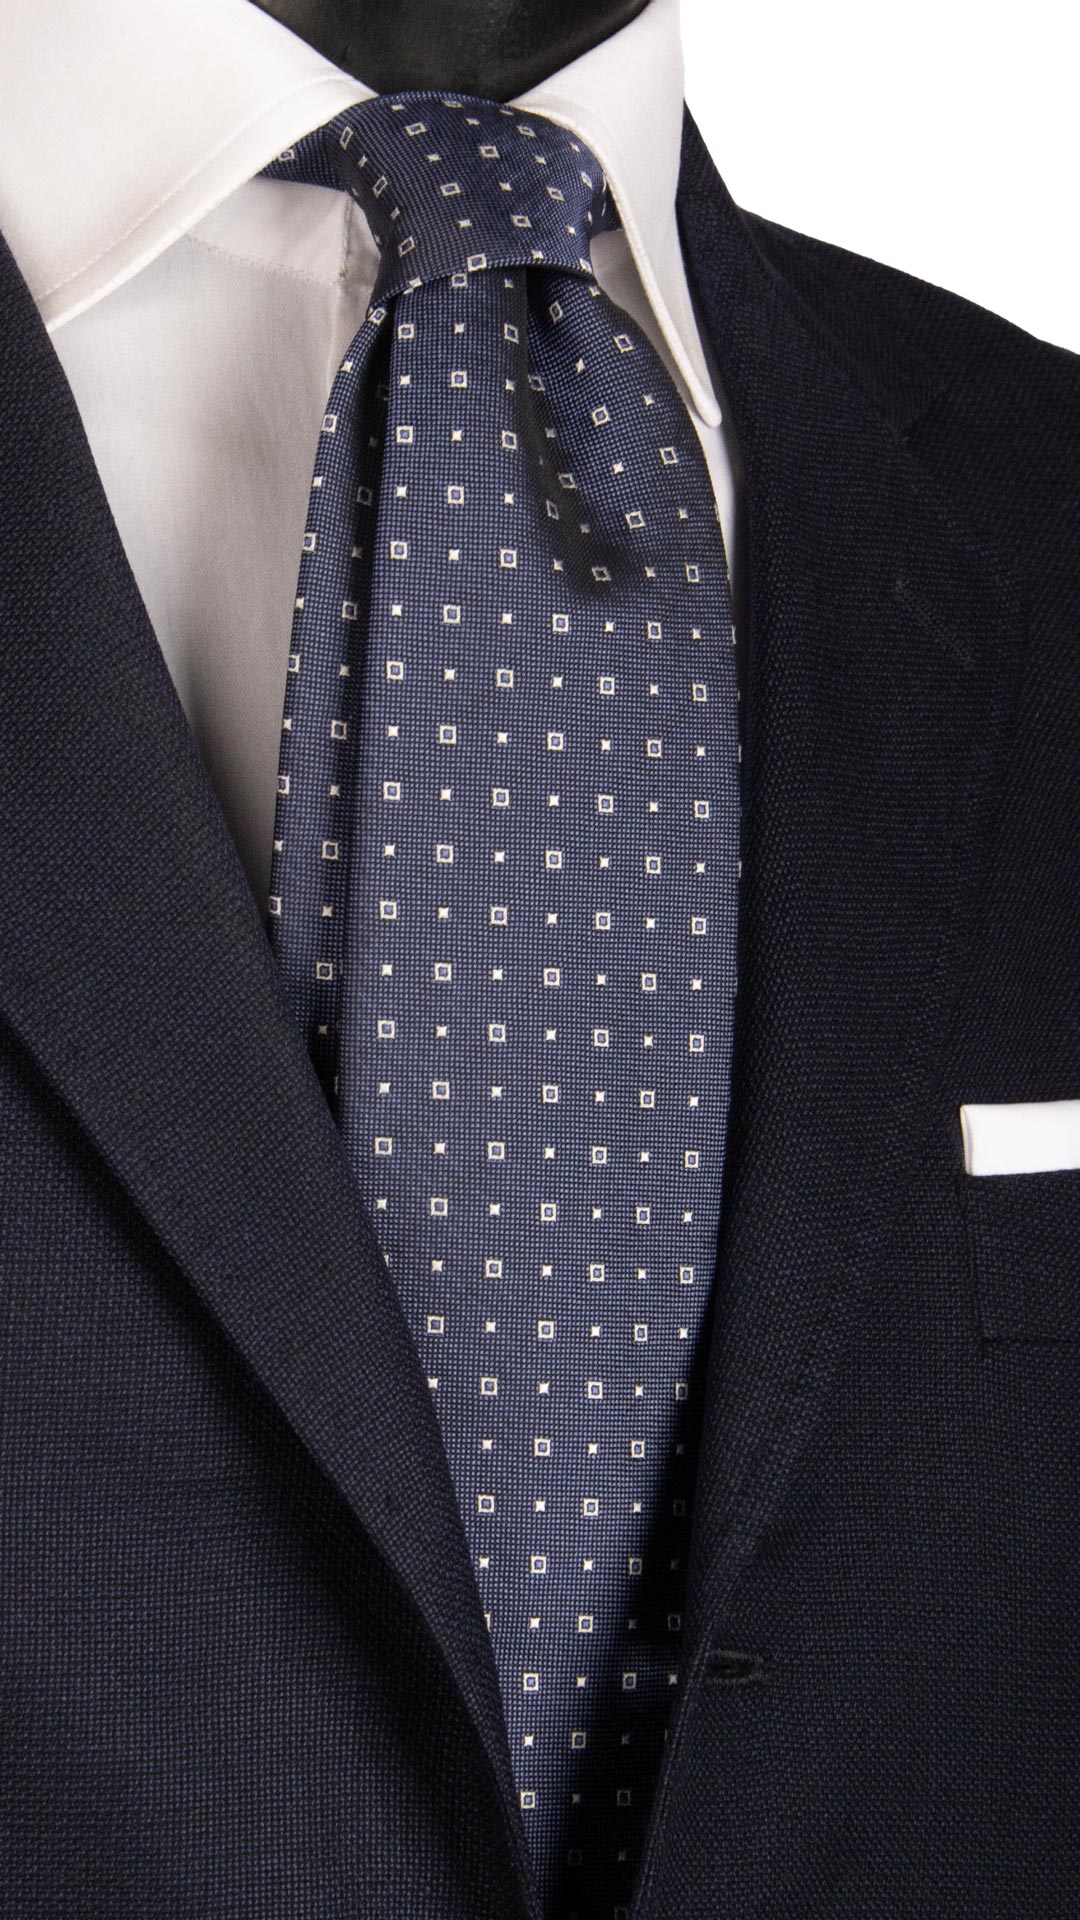 Cravatta da Cerimonia di Seta Blu Navy Fantasia Bianca CY6644 Made in Italy Graffeo Cravatte